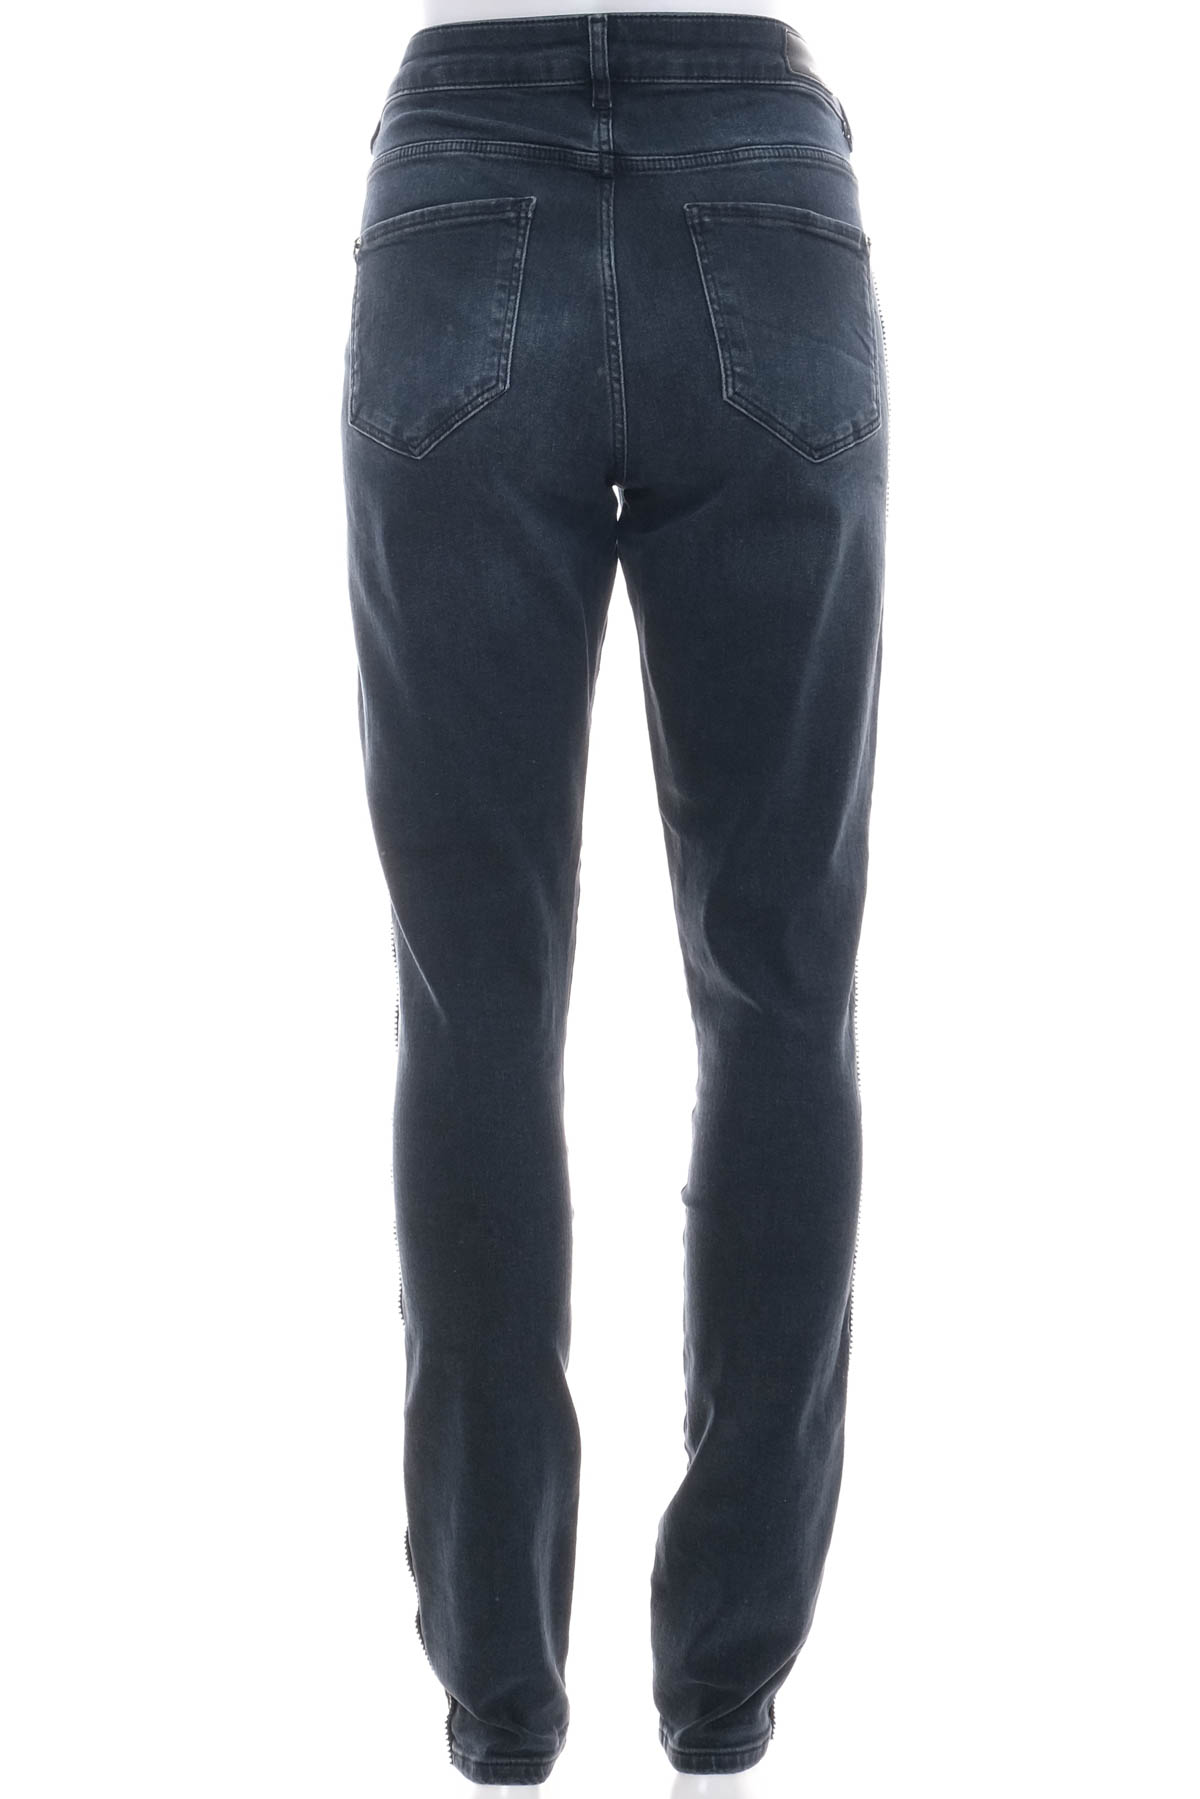 Women's jeans - Orsay - 1